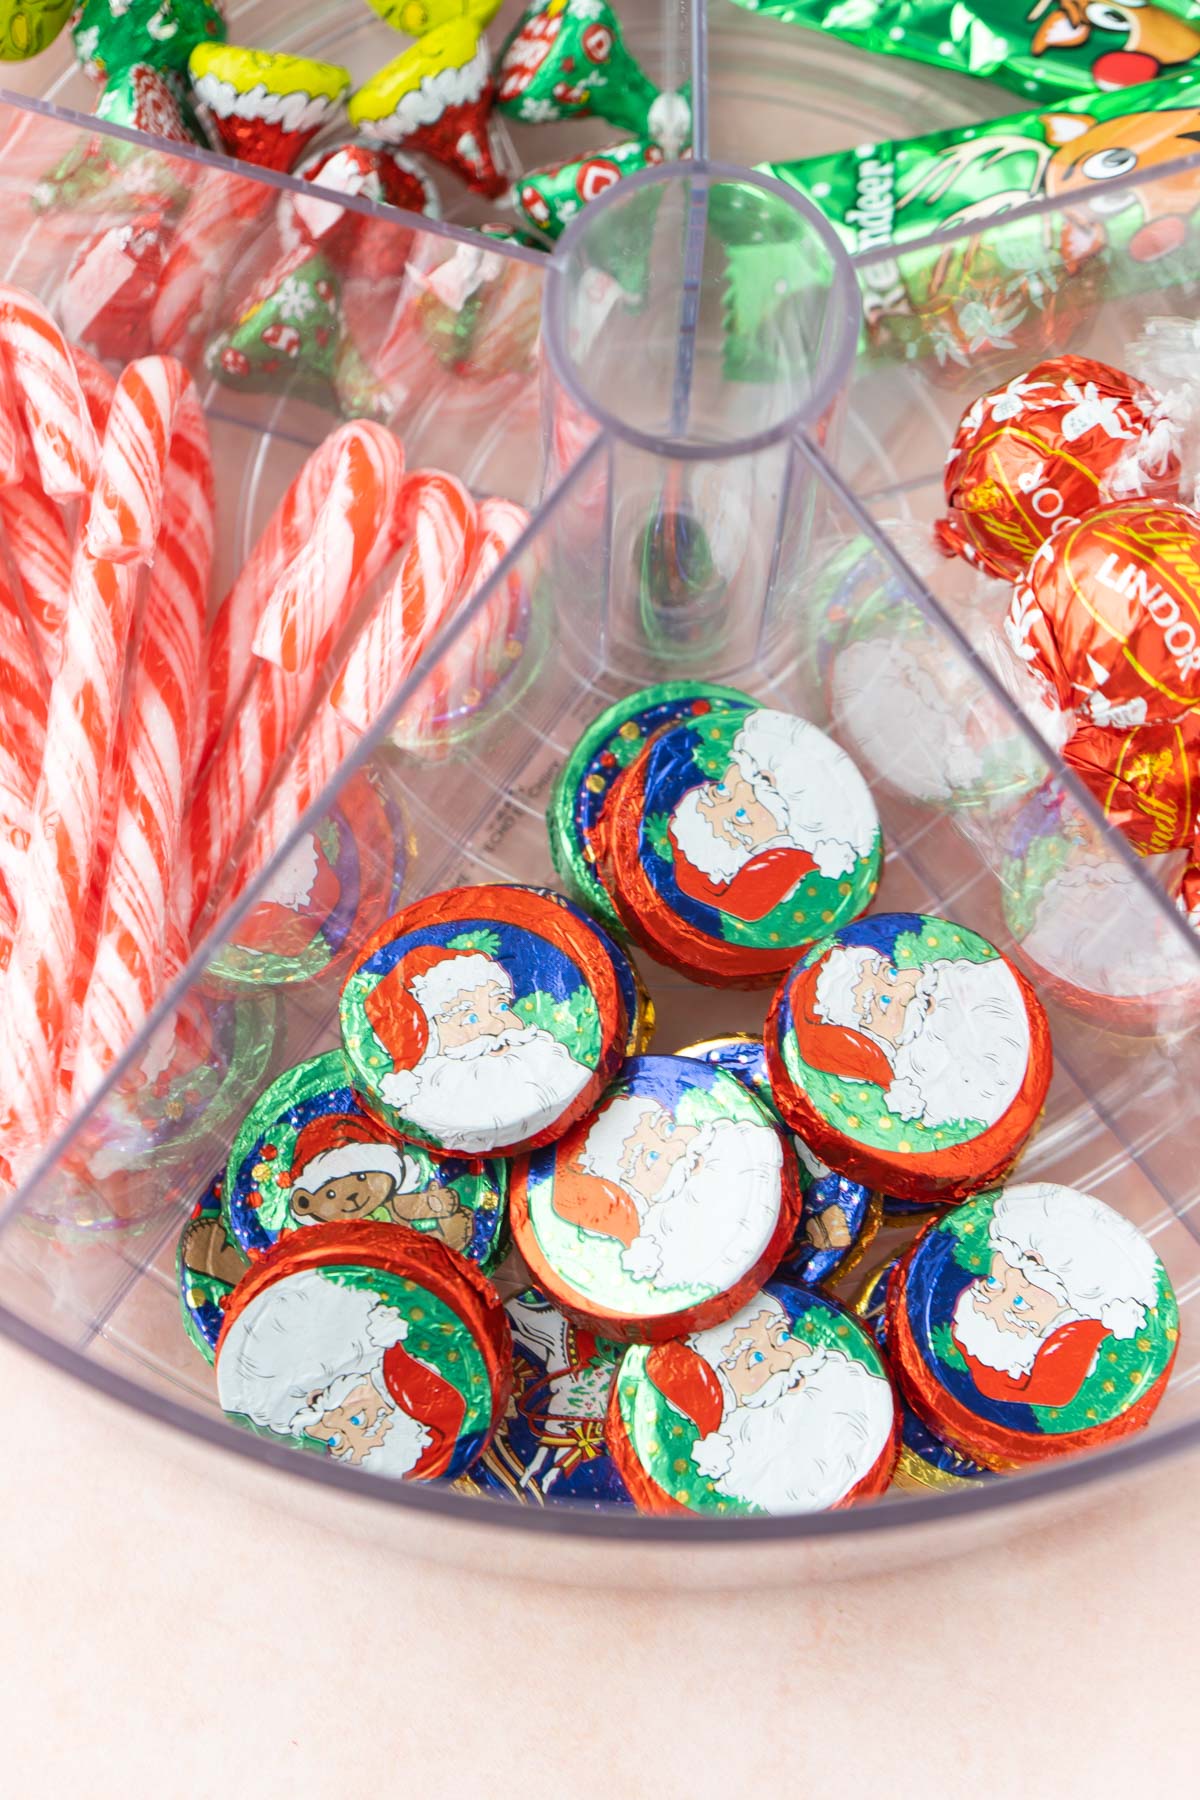 Santa candies in a plastic lazy susan